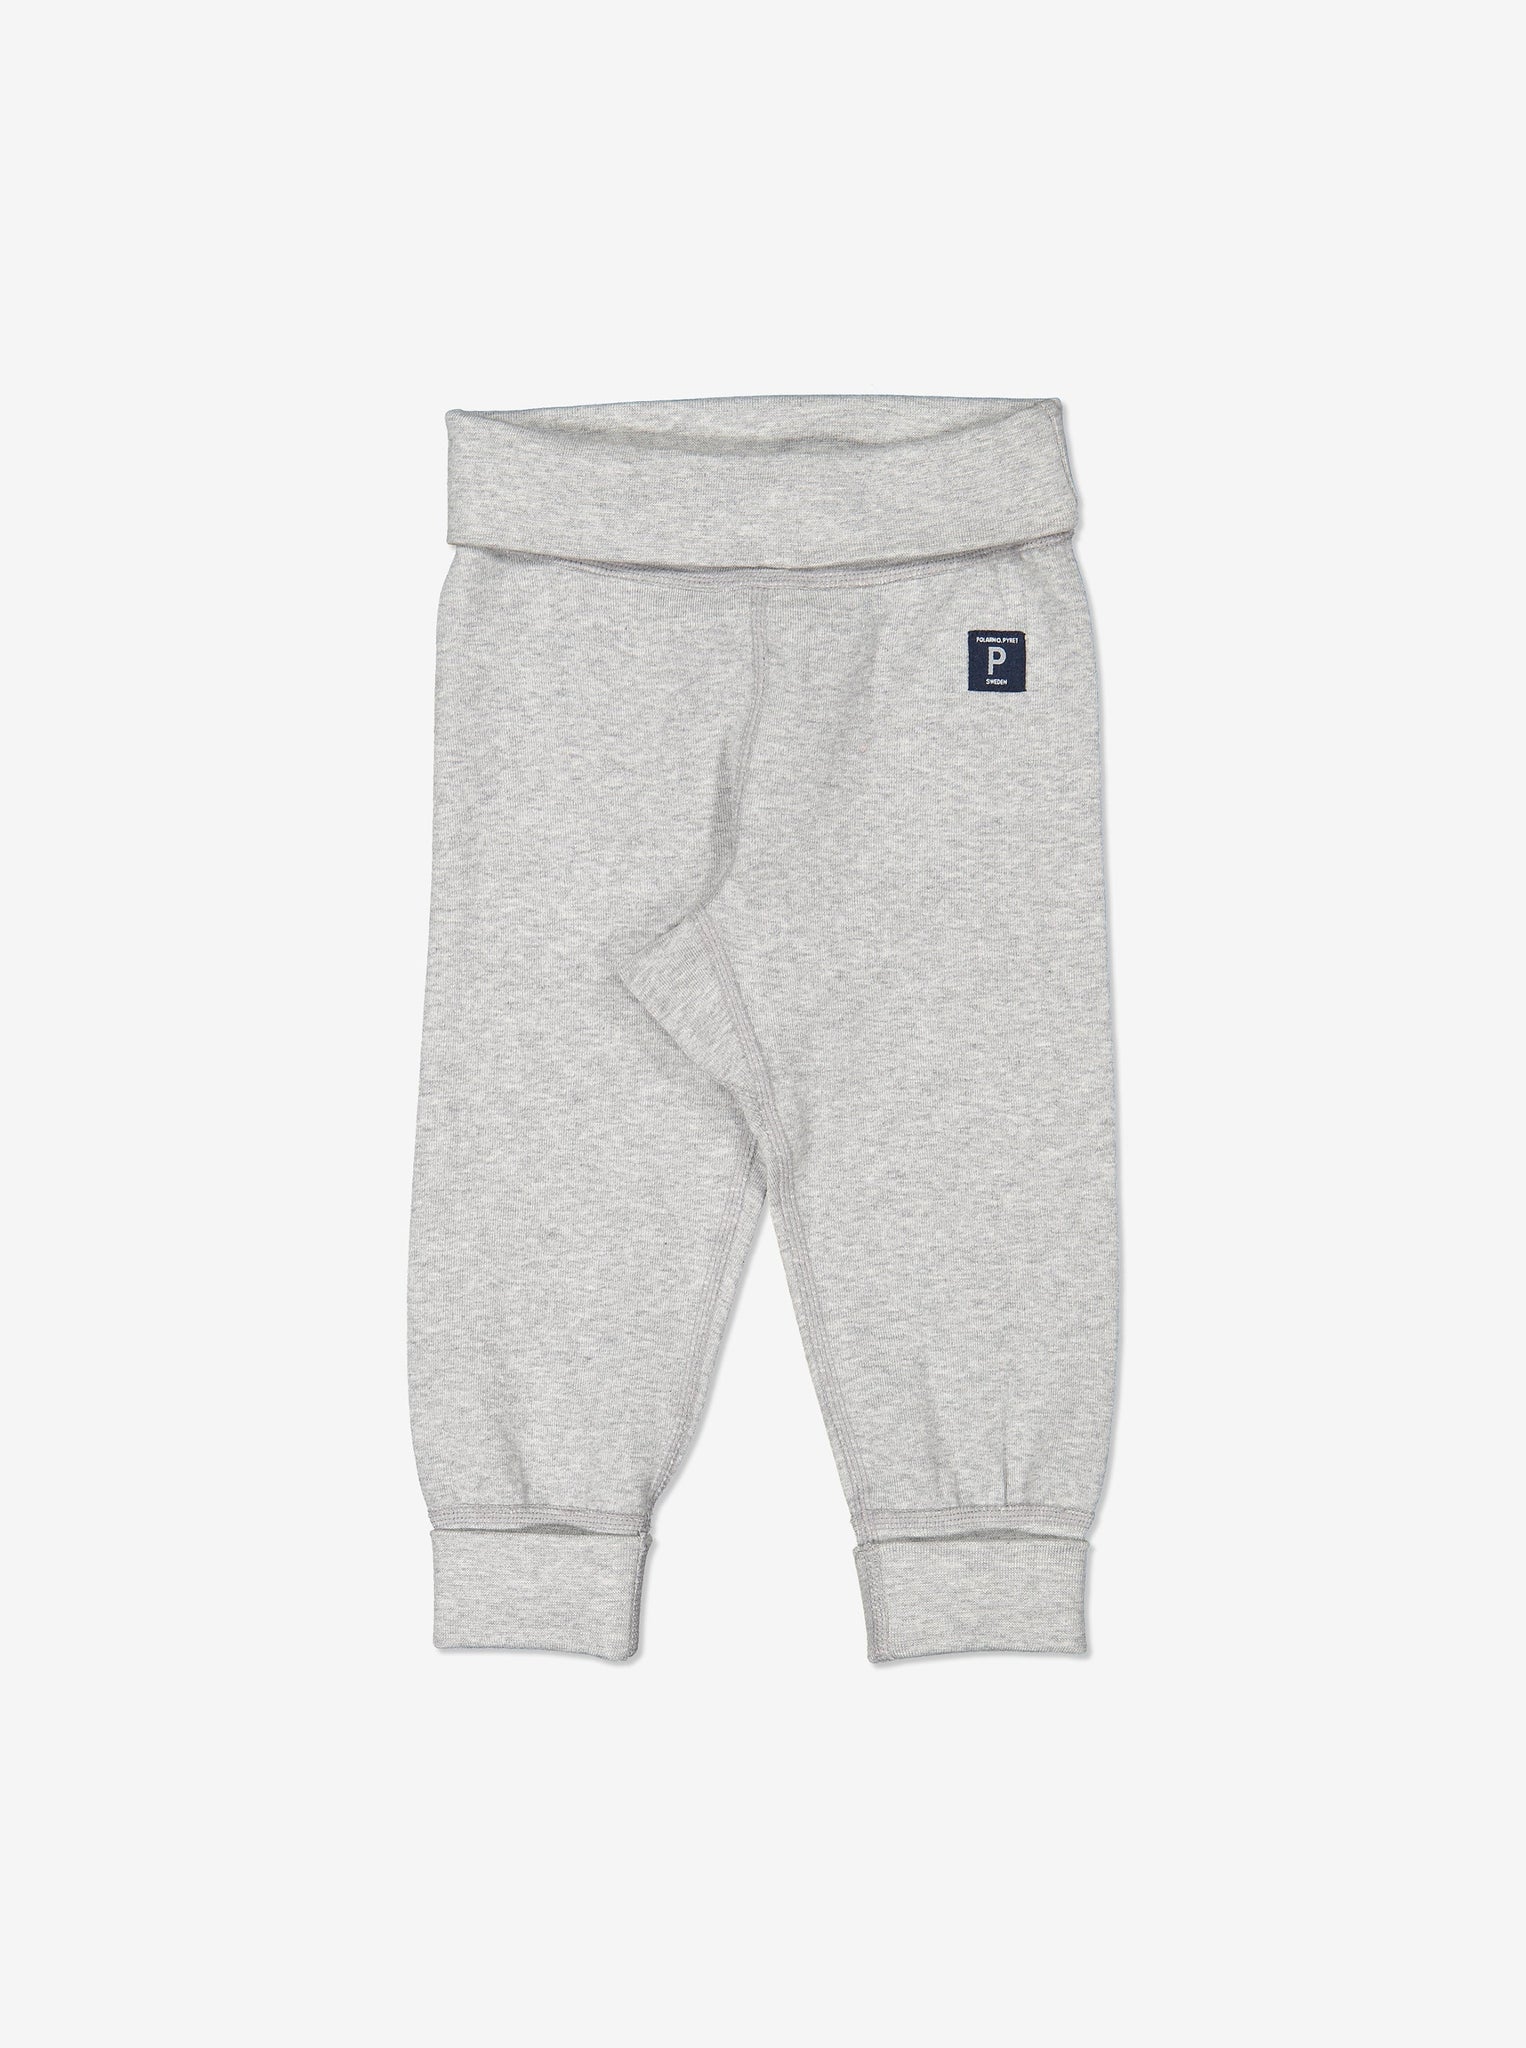 newborn grey leggings, ethical quality bottoms, polarn o. pyret organic cotton